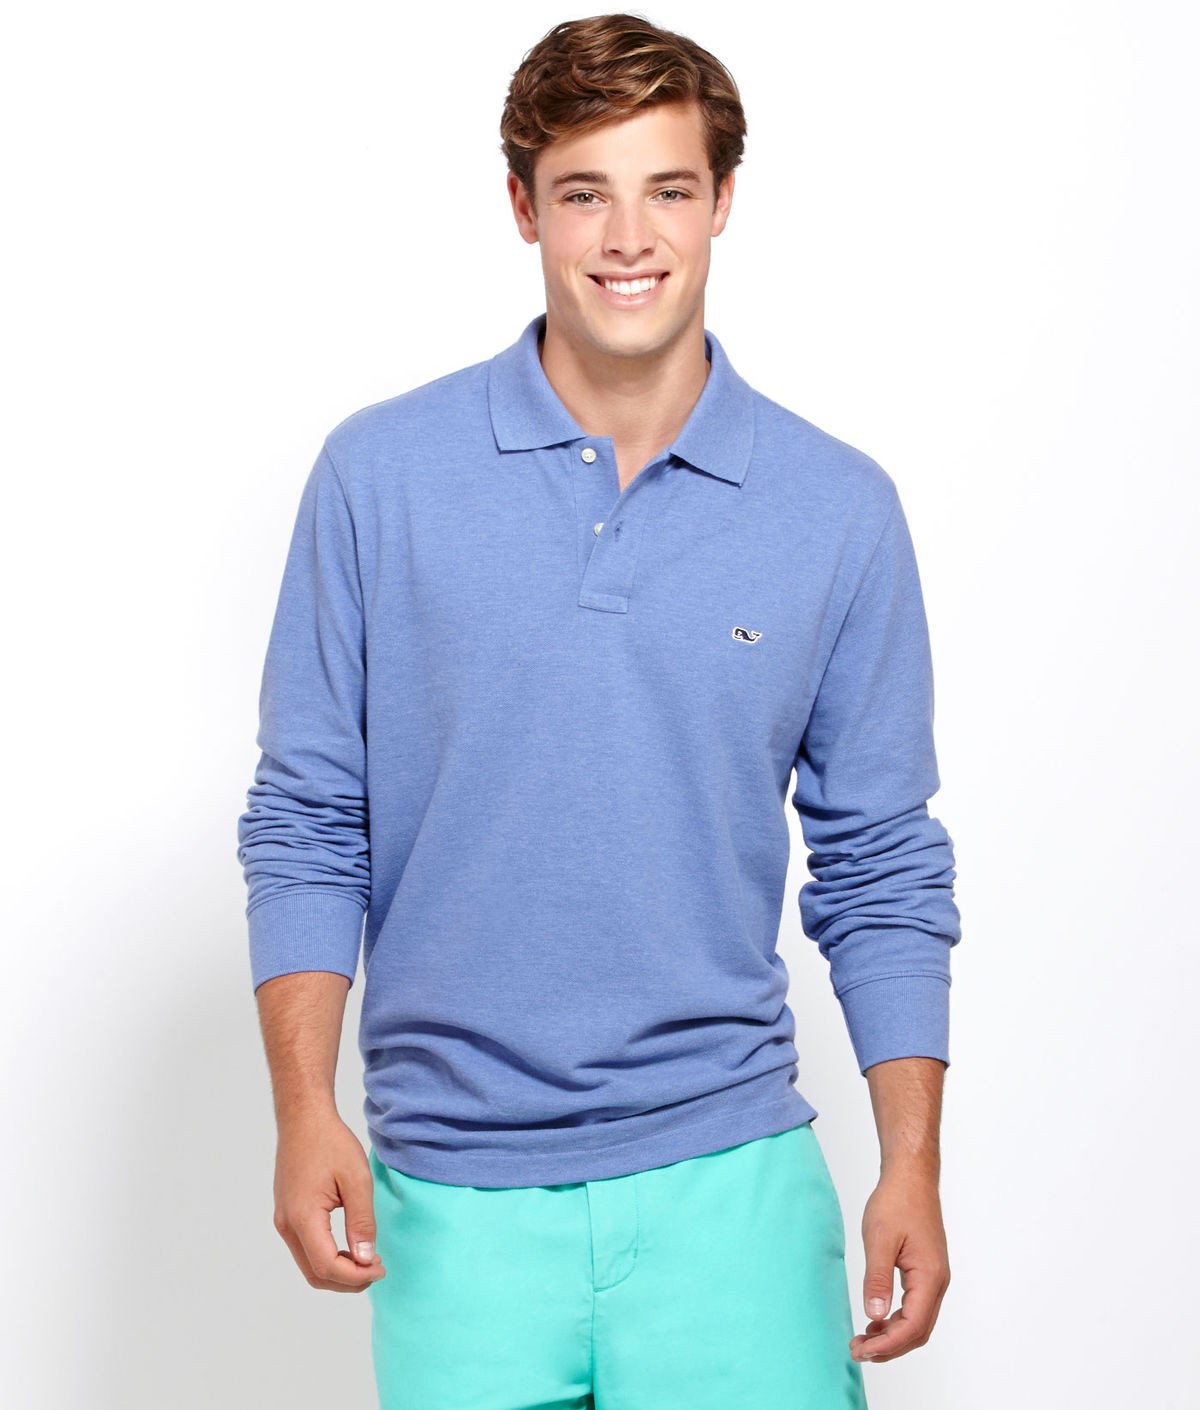 stylish golf fullsleve shirt